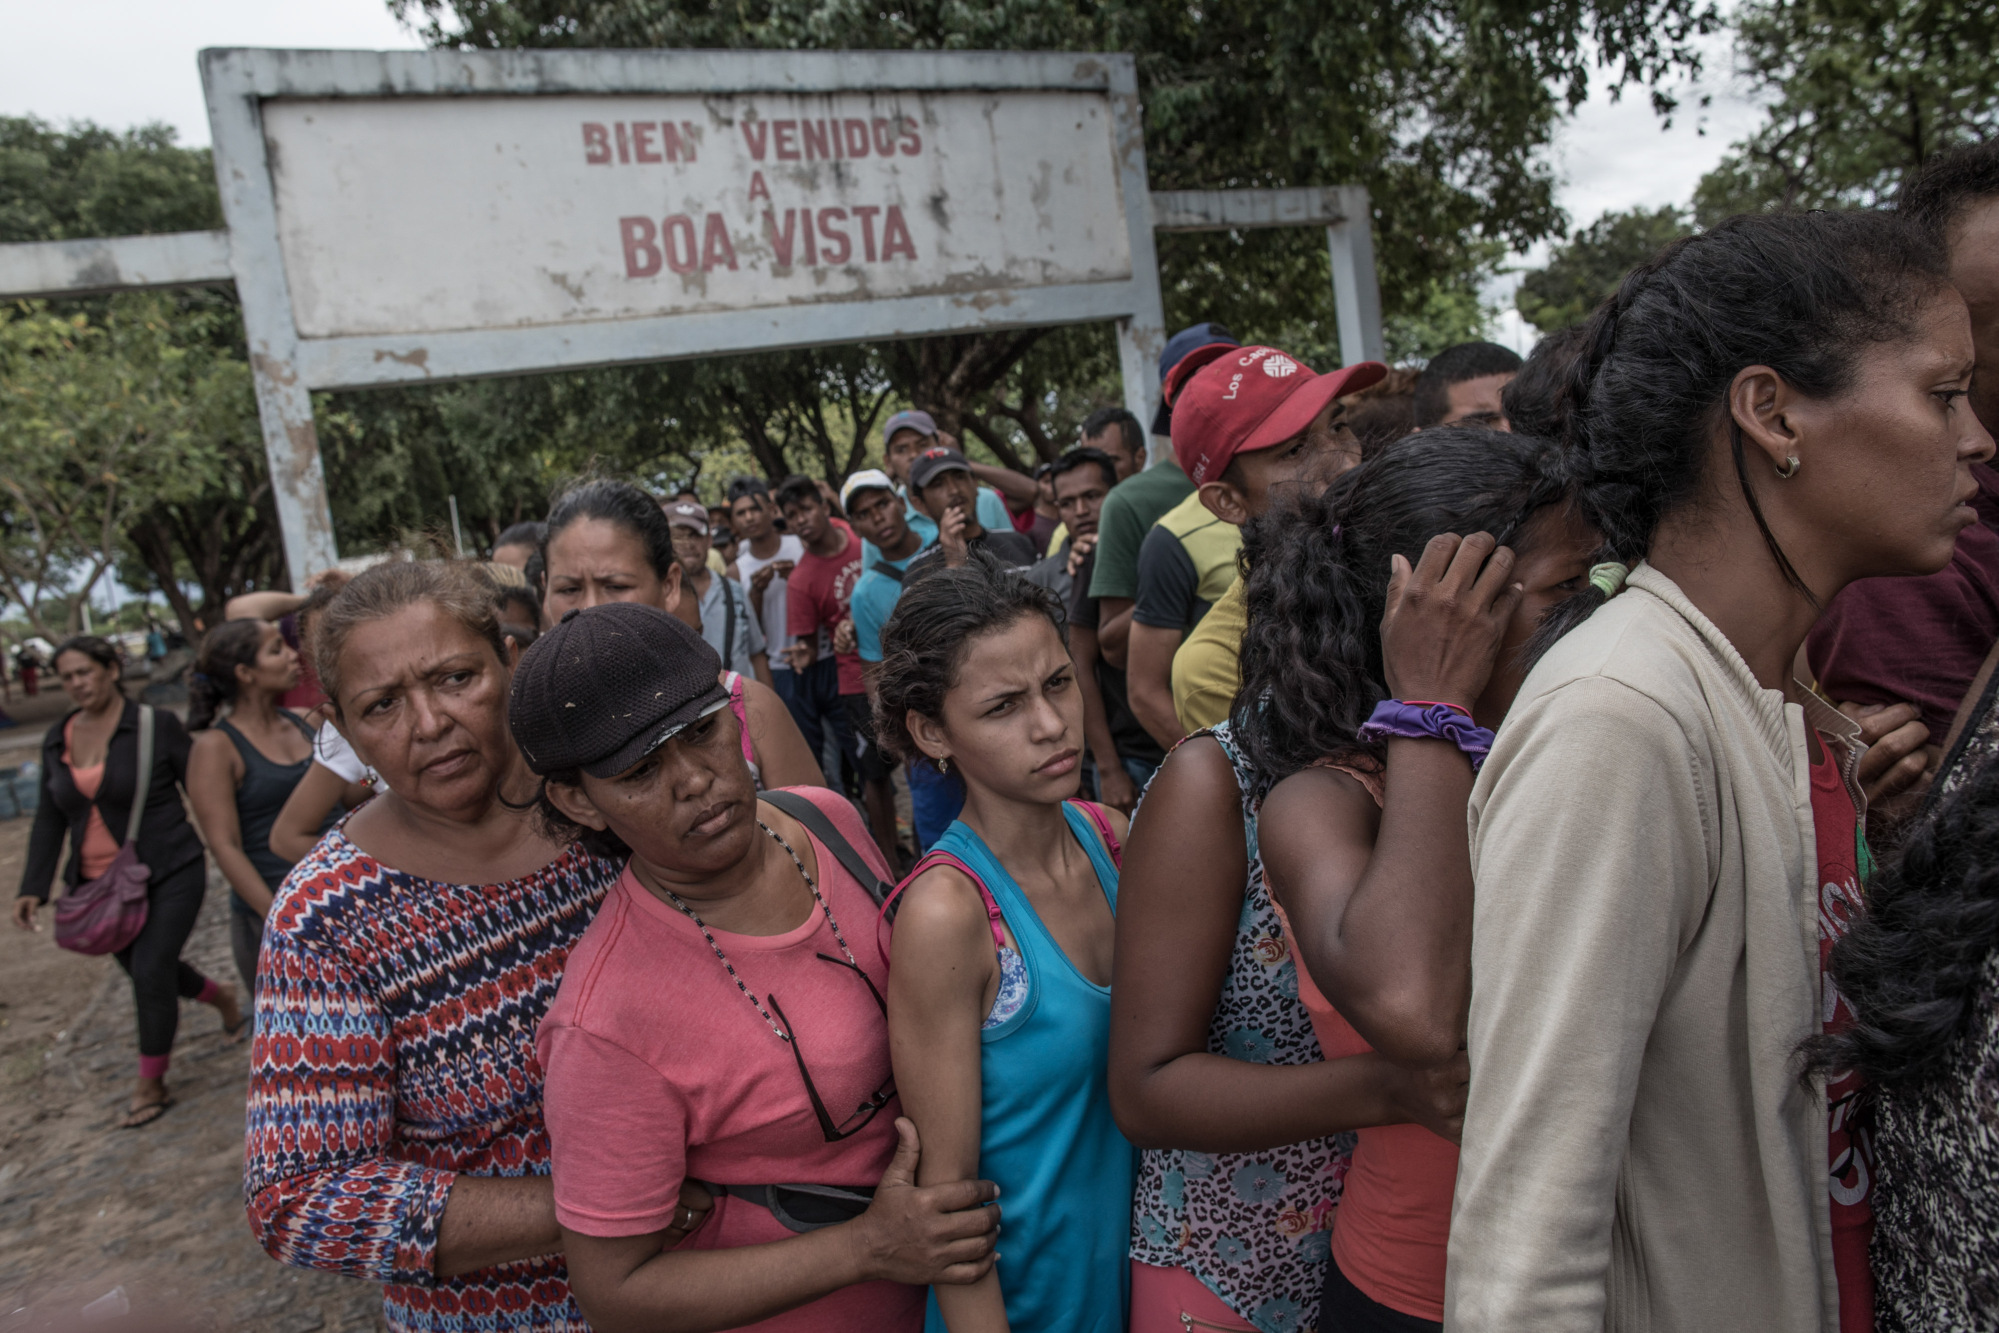 Venezuelans wait in line to receive food donations at Simon Bolivar Square in Boa Vista, Brazil.